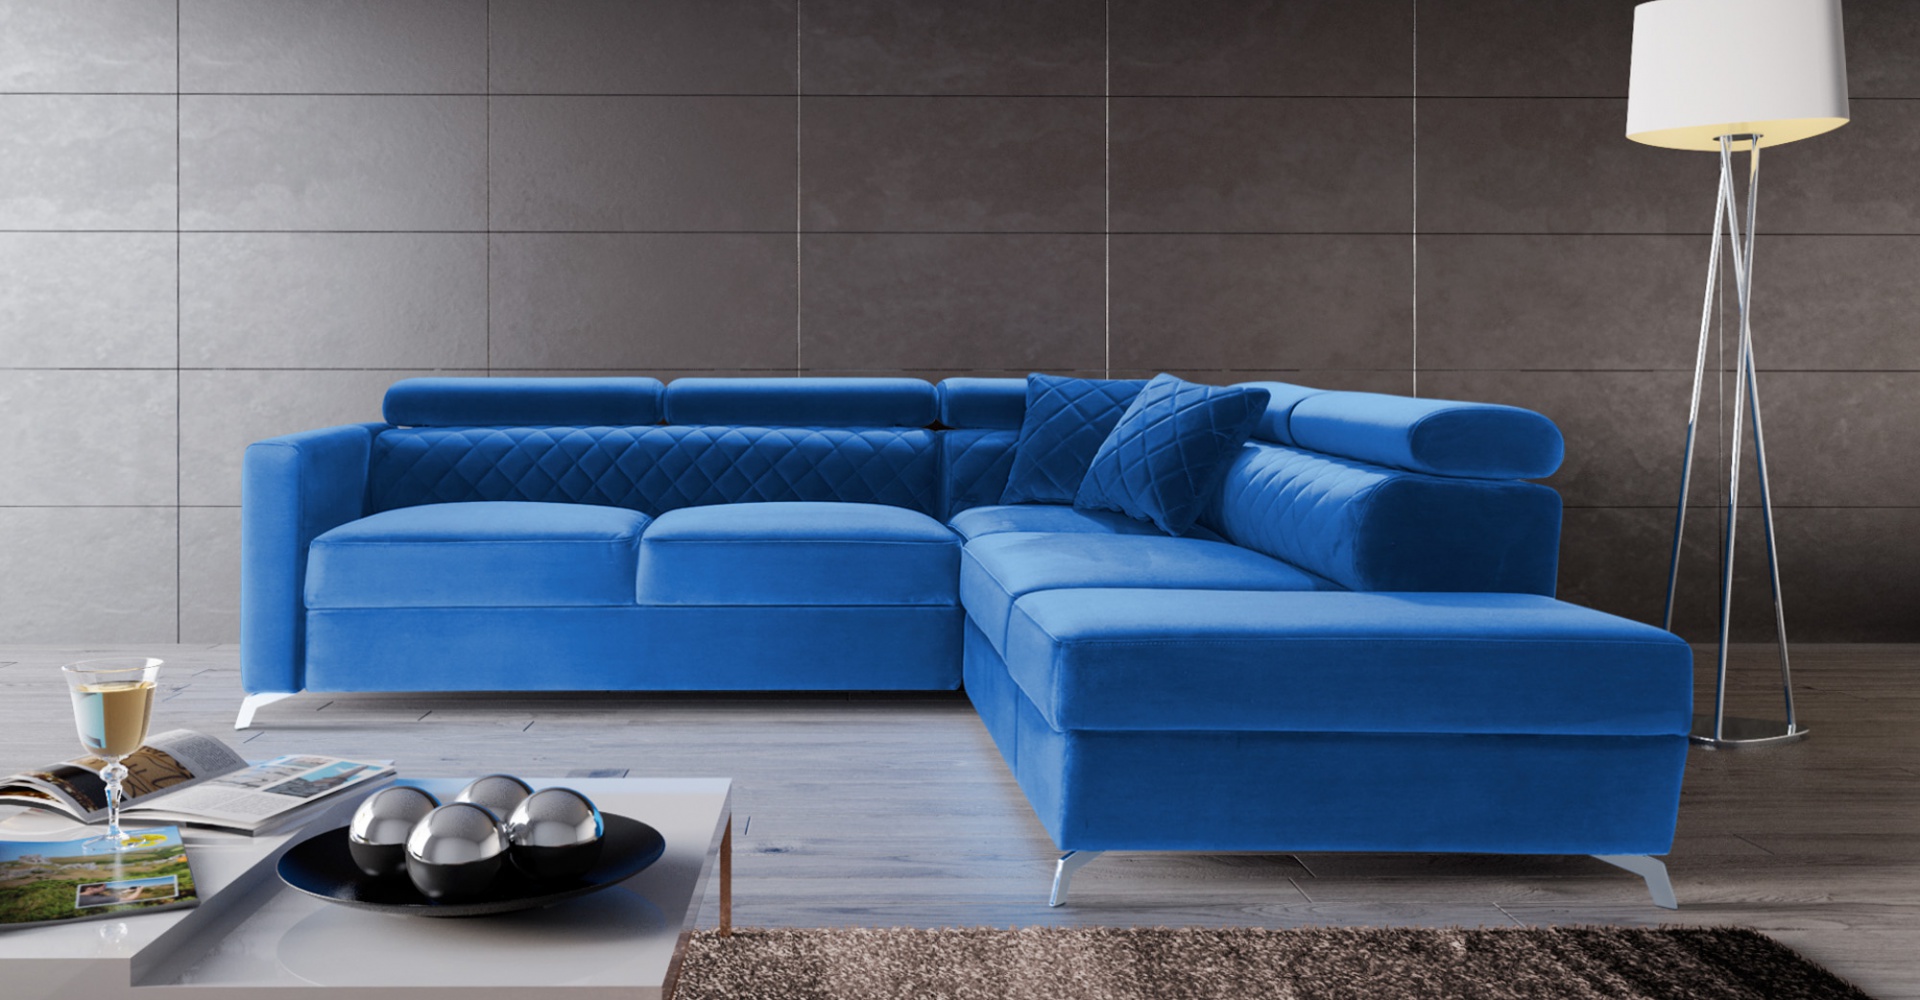 Ecksofa L-Form Couch Design Polster Textil Bettfunktion ...